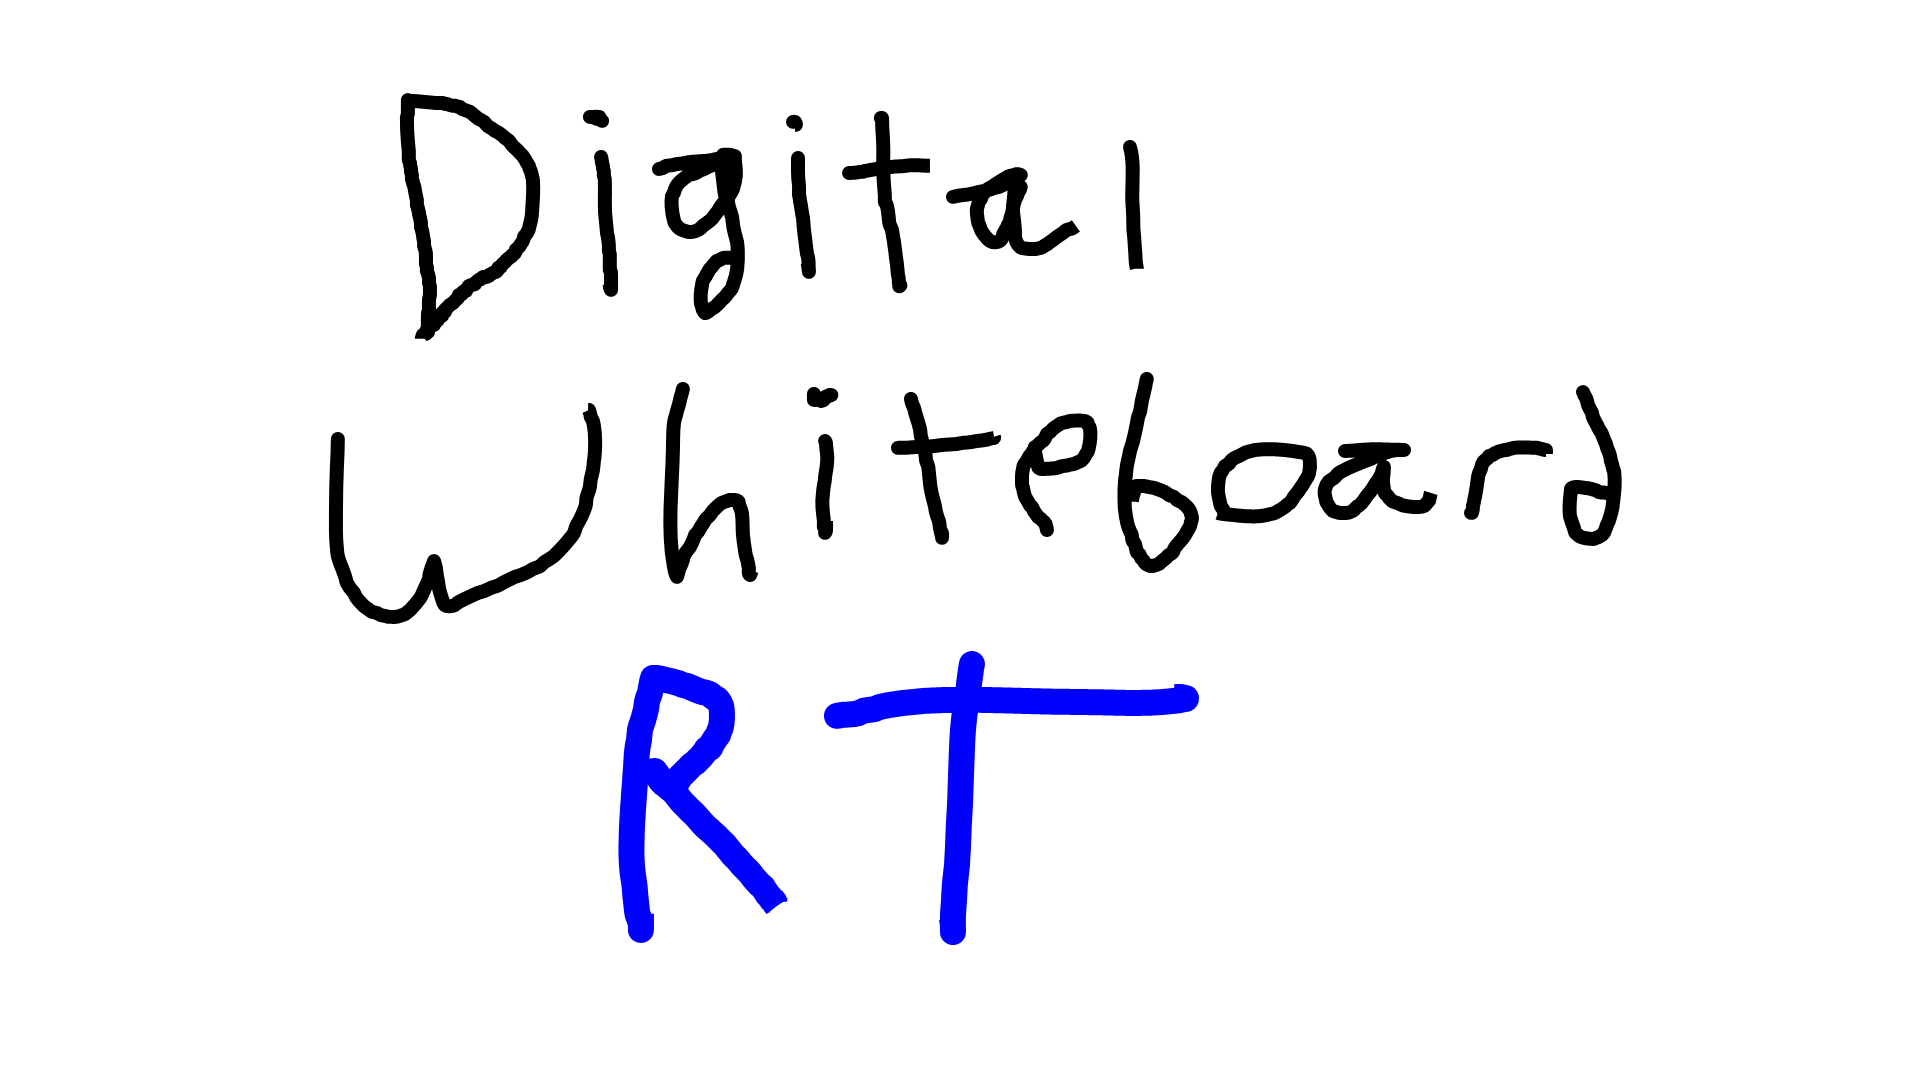 Turn any Windows 8 device into a digital whiteboard!